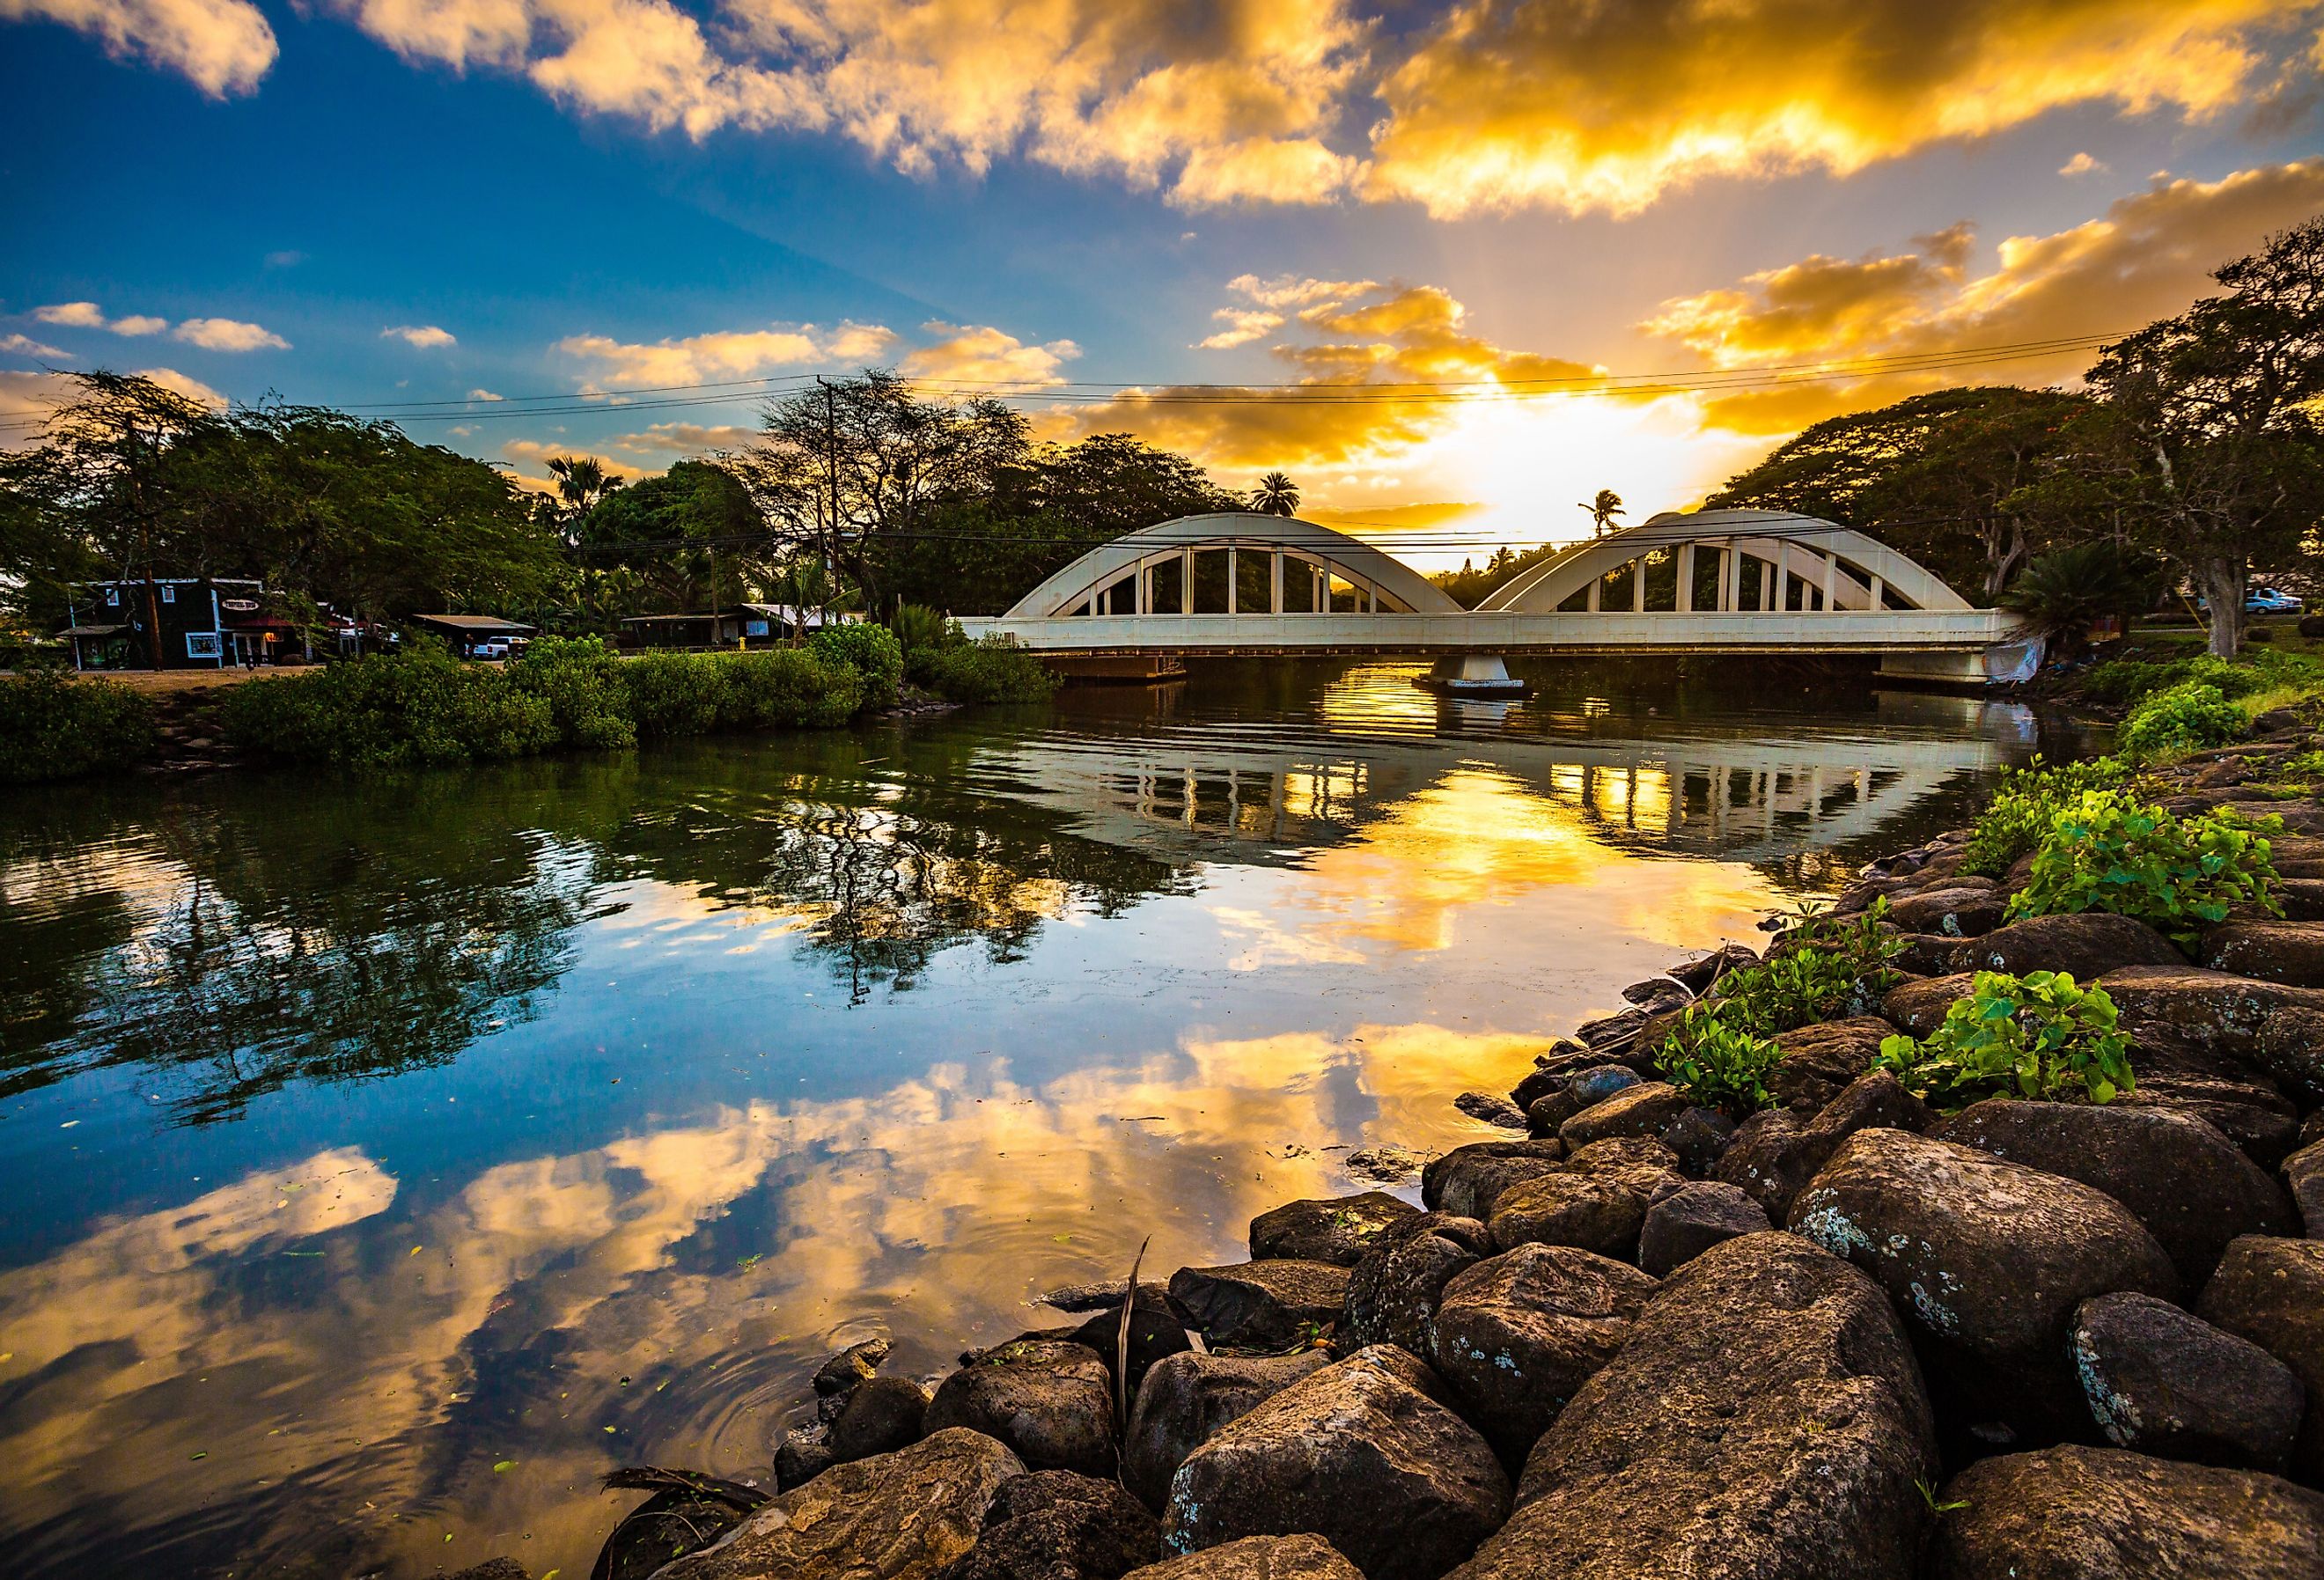 Sunrise over the Anahulu Stream Bridge in Haleiwa, Oahu, Hawaii. Image credit Shane Myers Photography via Shutterstock.